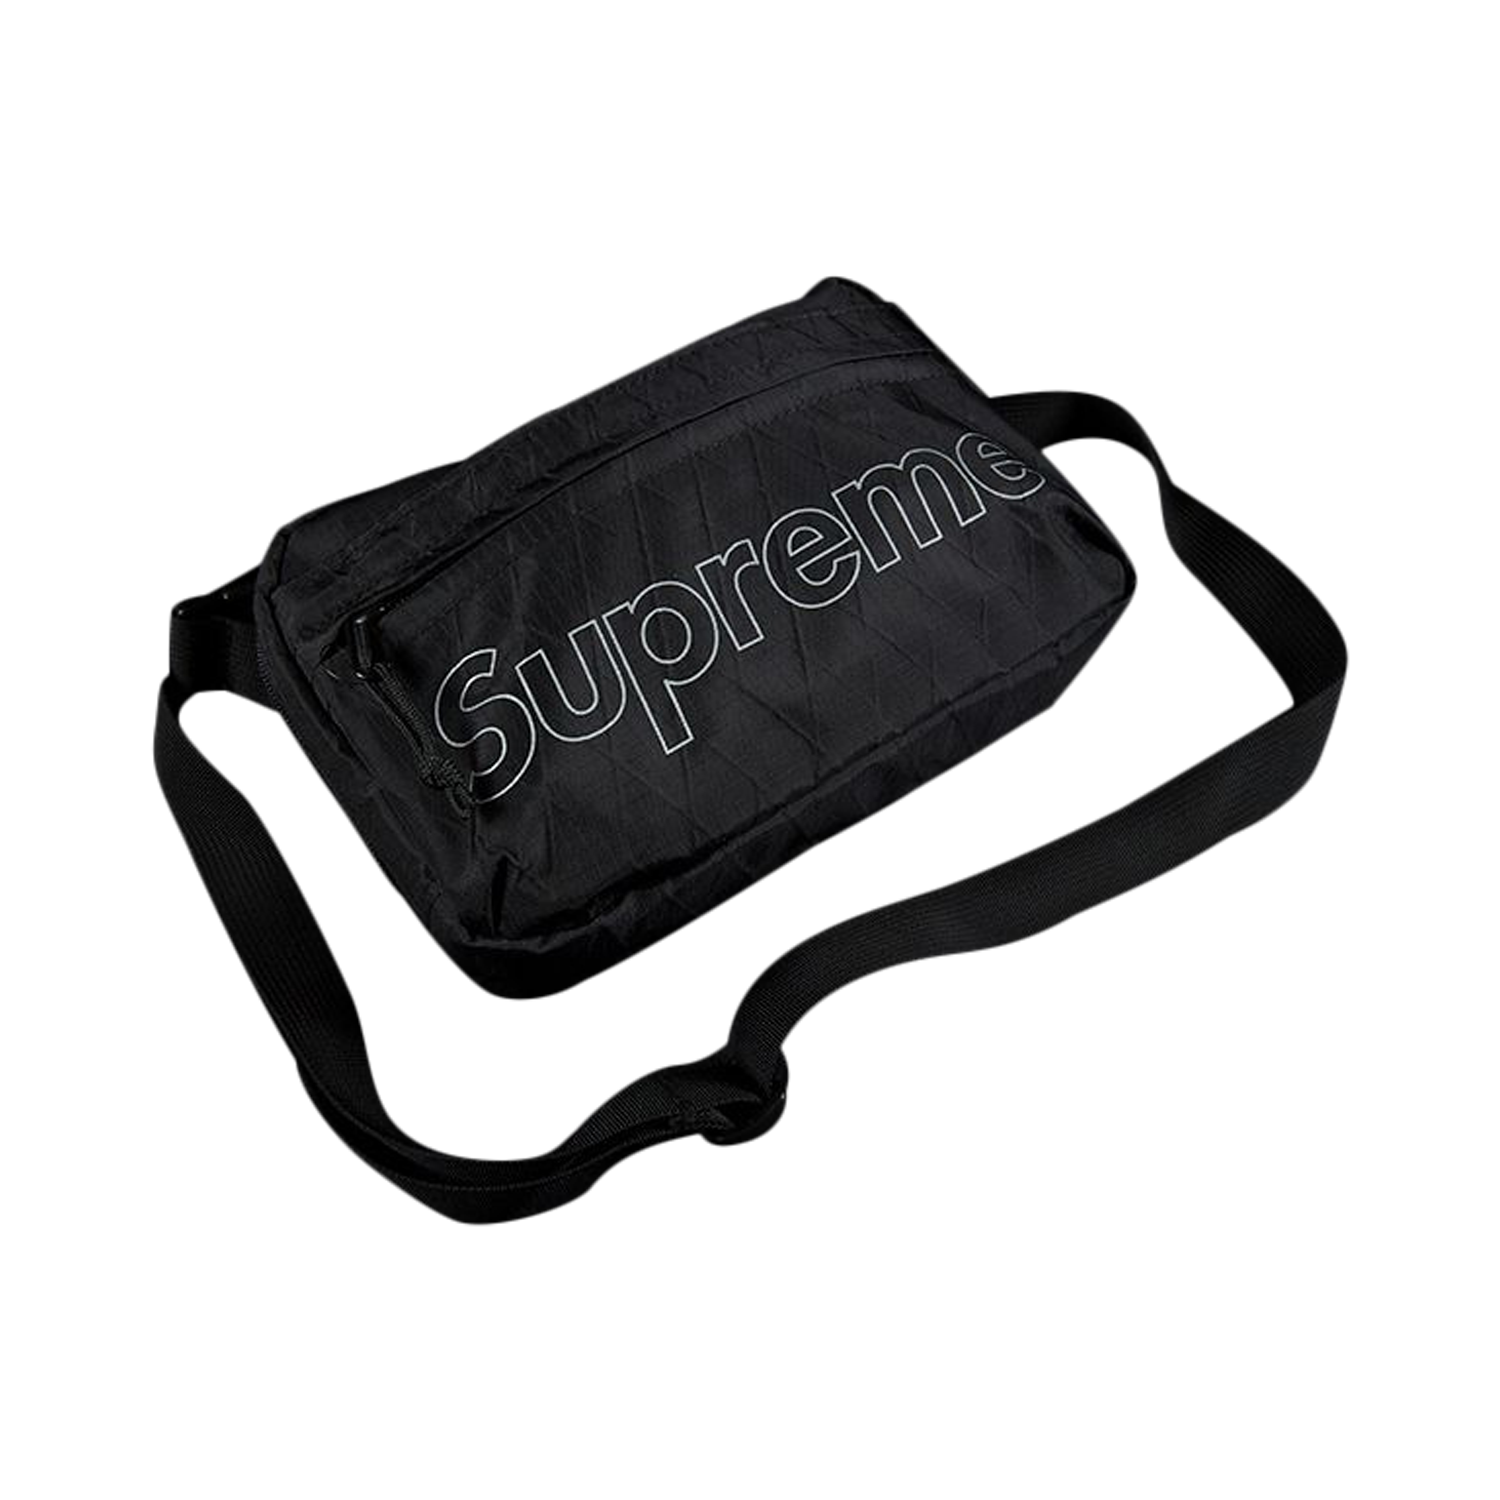 Supreme Shoulder Bag SS18 with Cordura rip stop